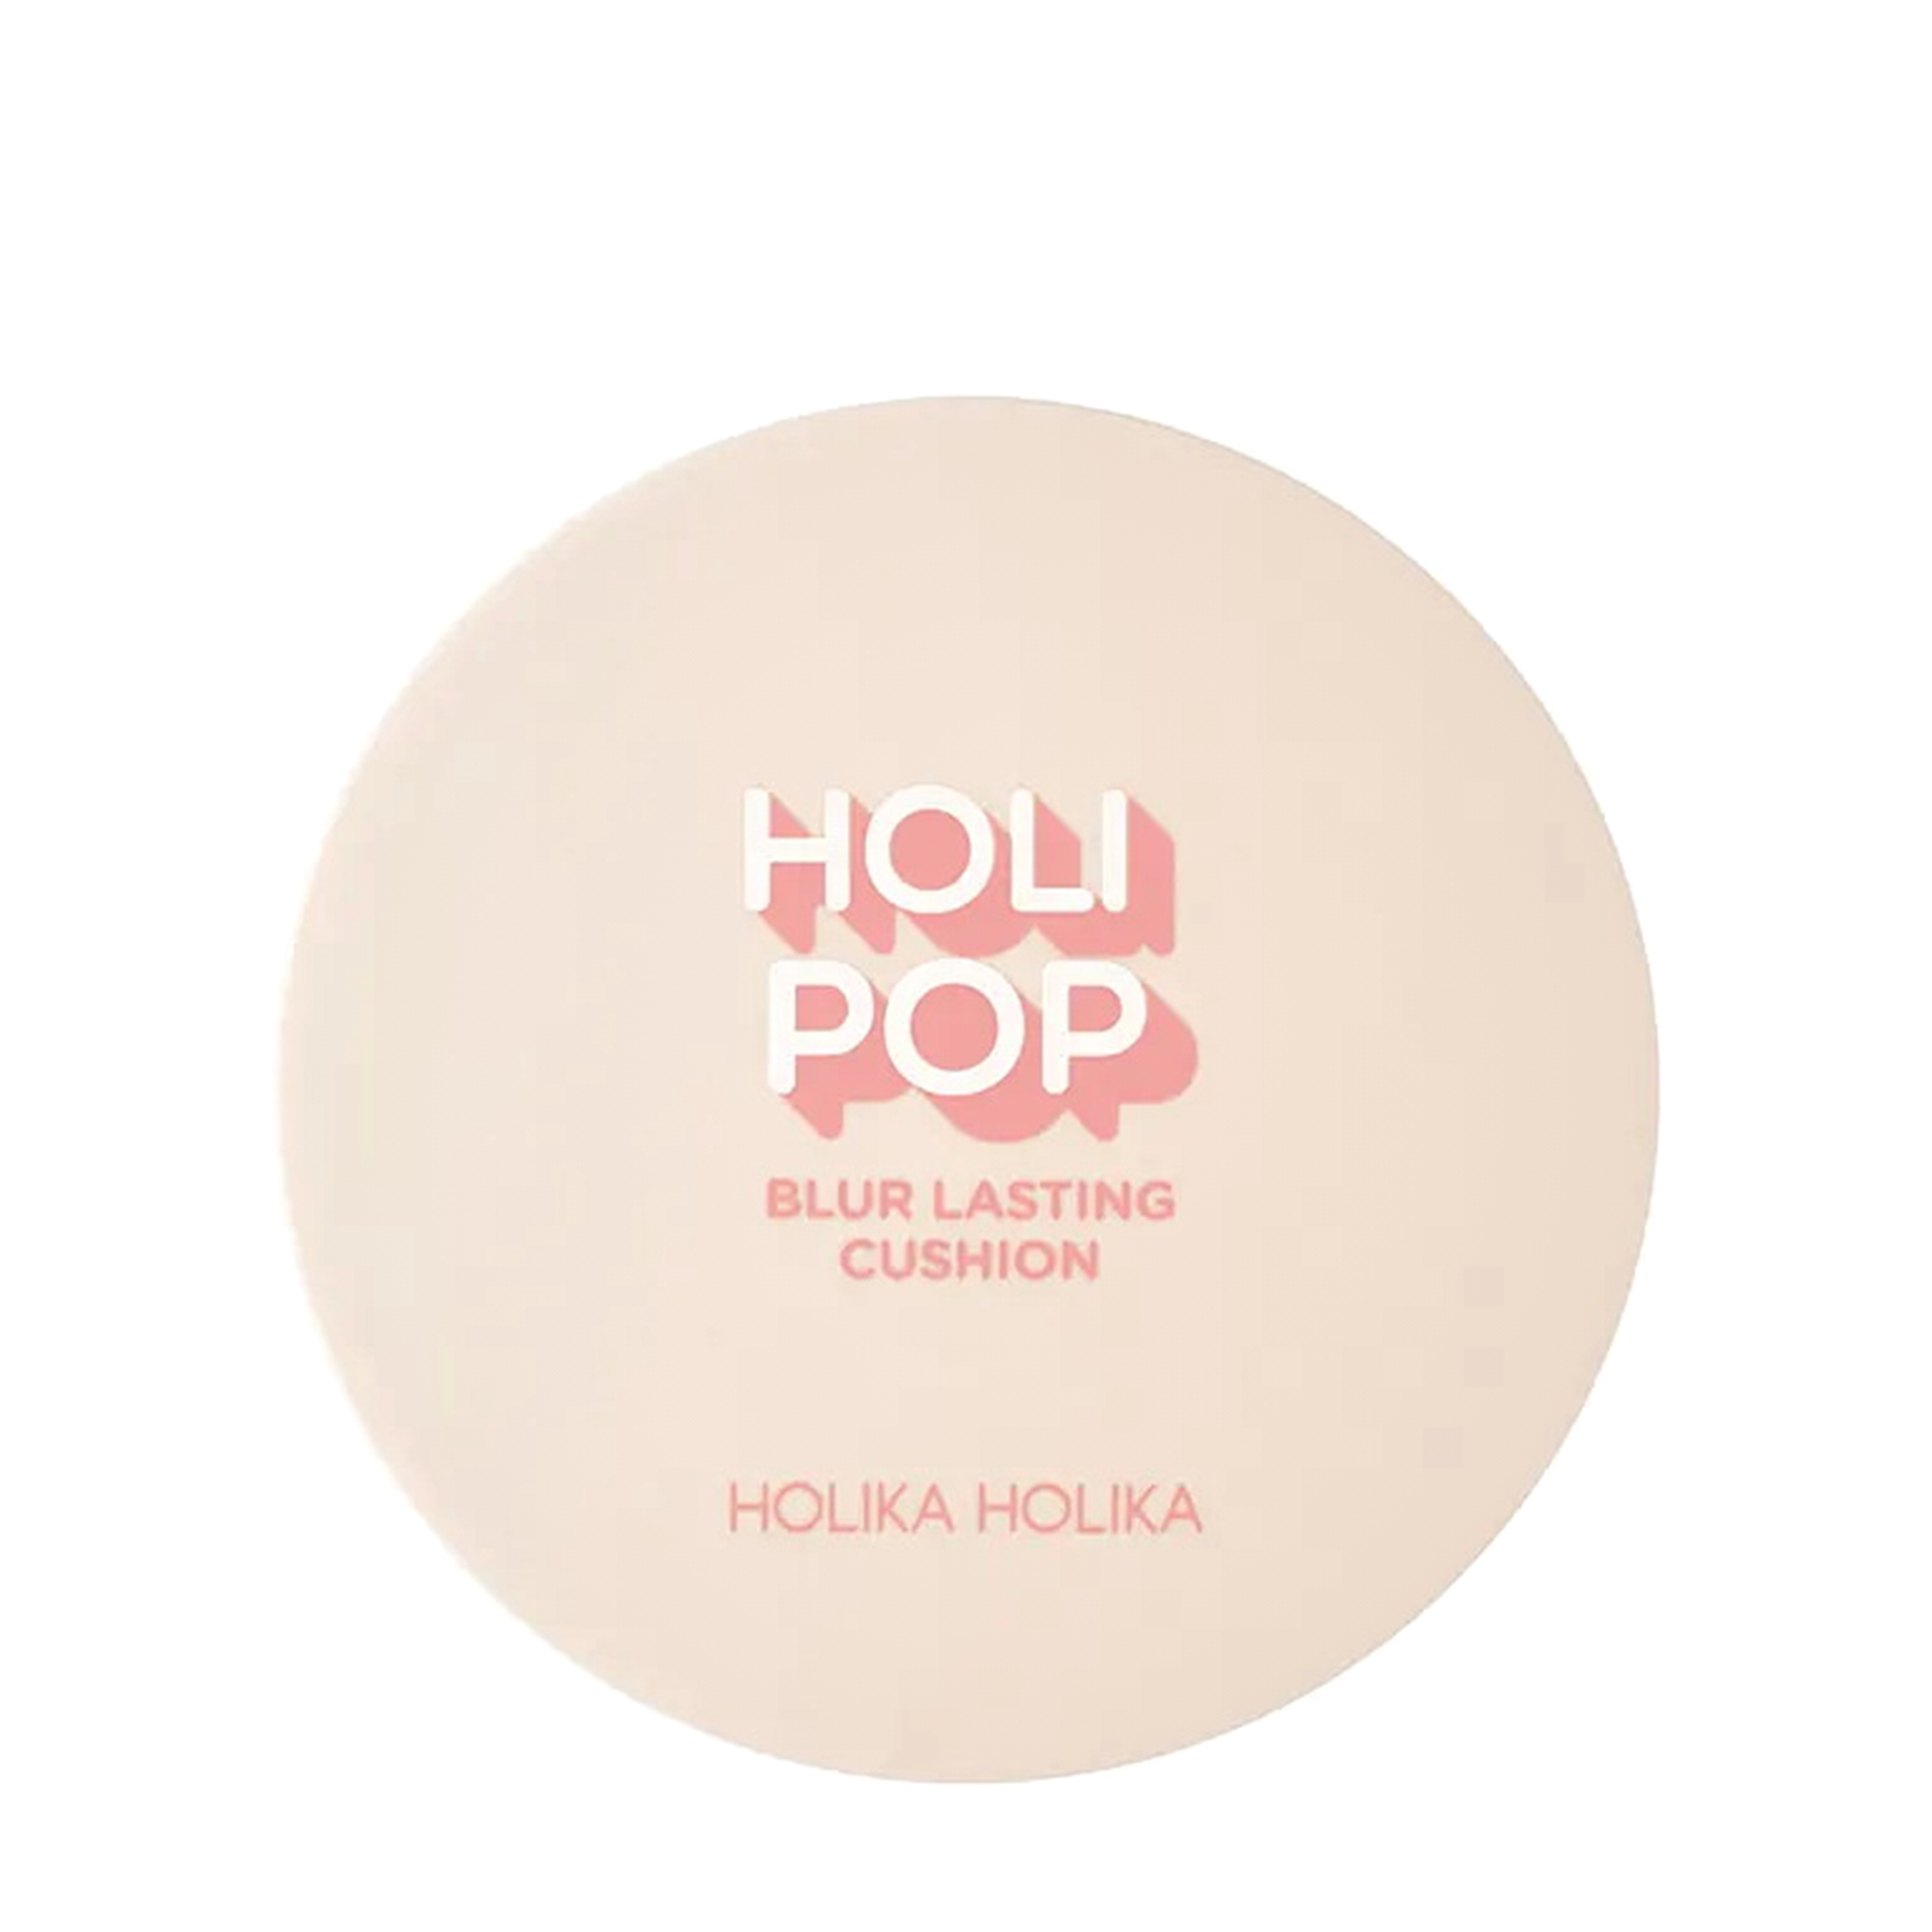 Holika Holika Holika Holika Матирующий кушон для лица Holipop Blur Lasting Cushion, оттенок 2 (розово-бежевый) 13 гр